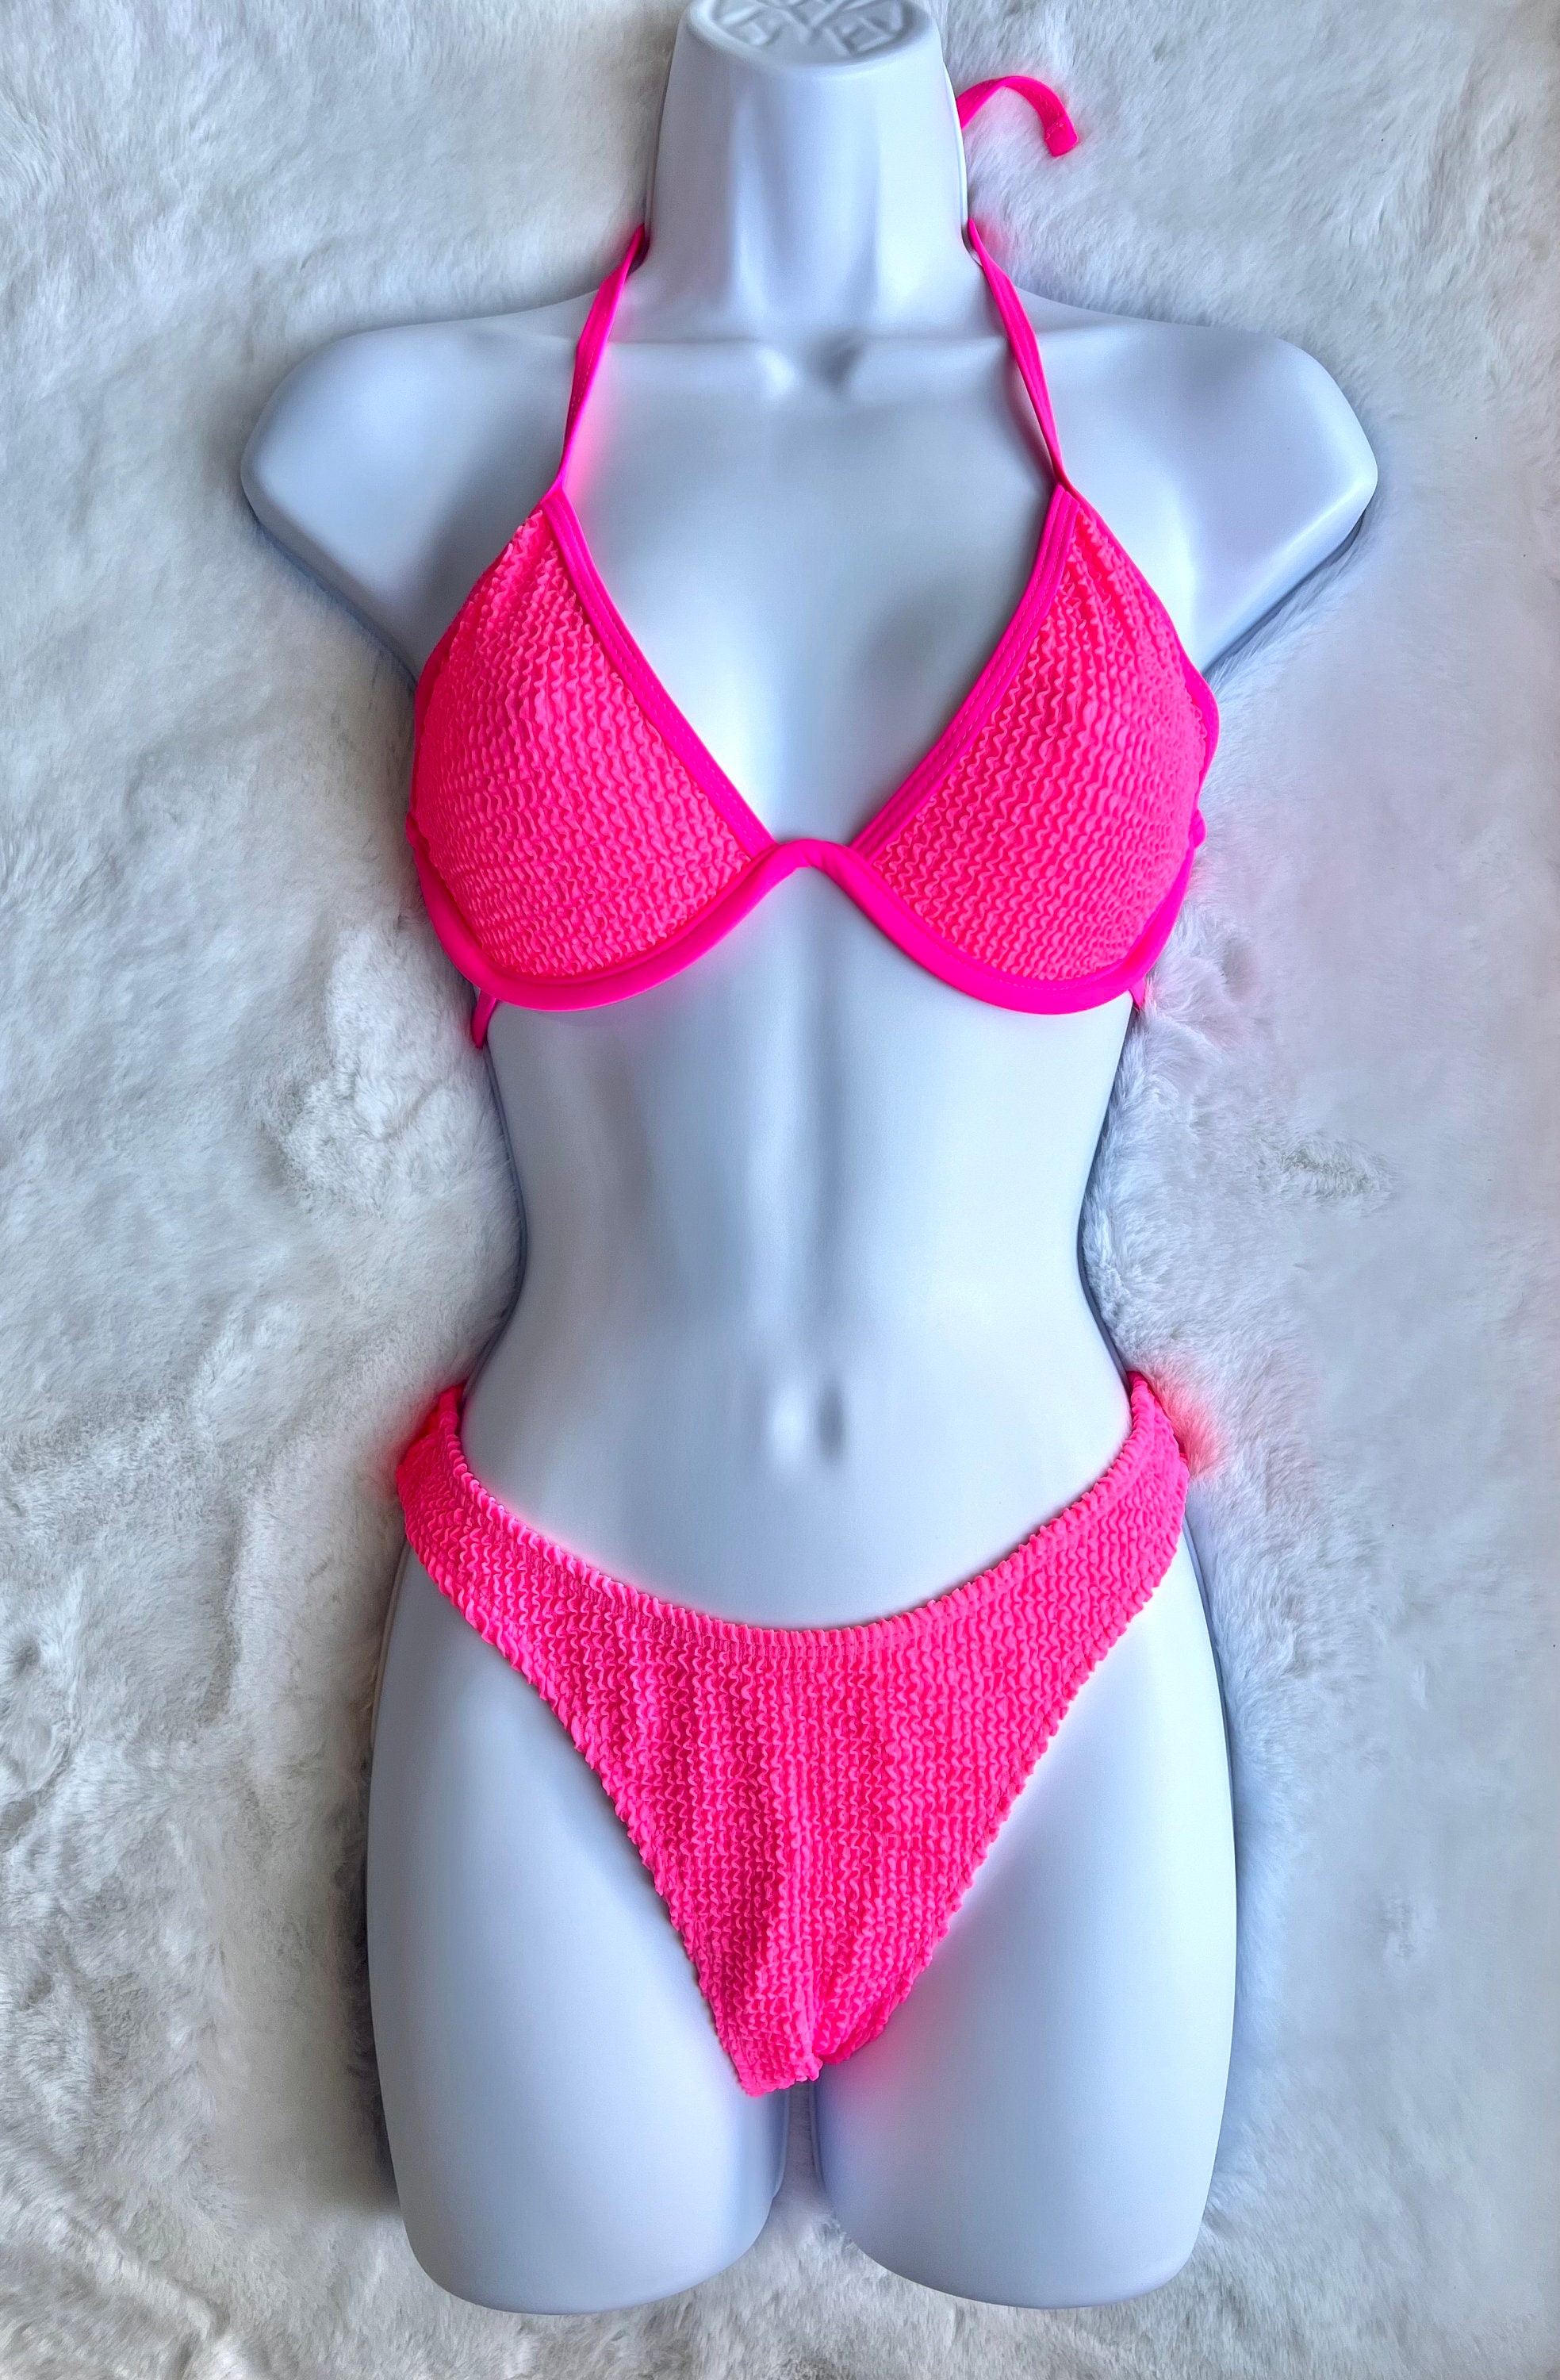 Crochet Pattern Bikini Top With Texture. 2 Versions. Triangle